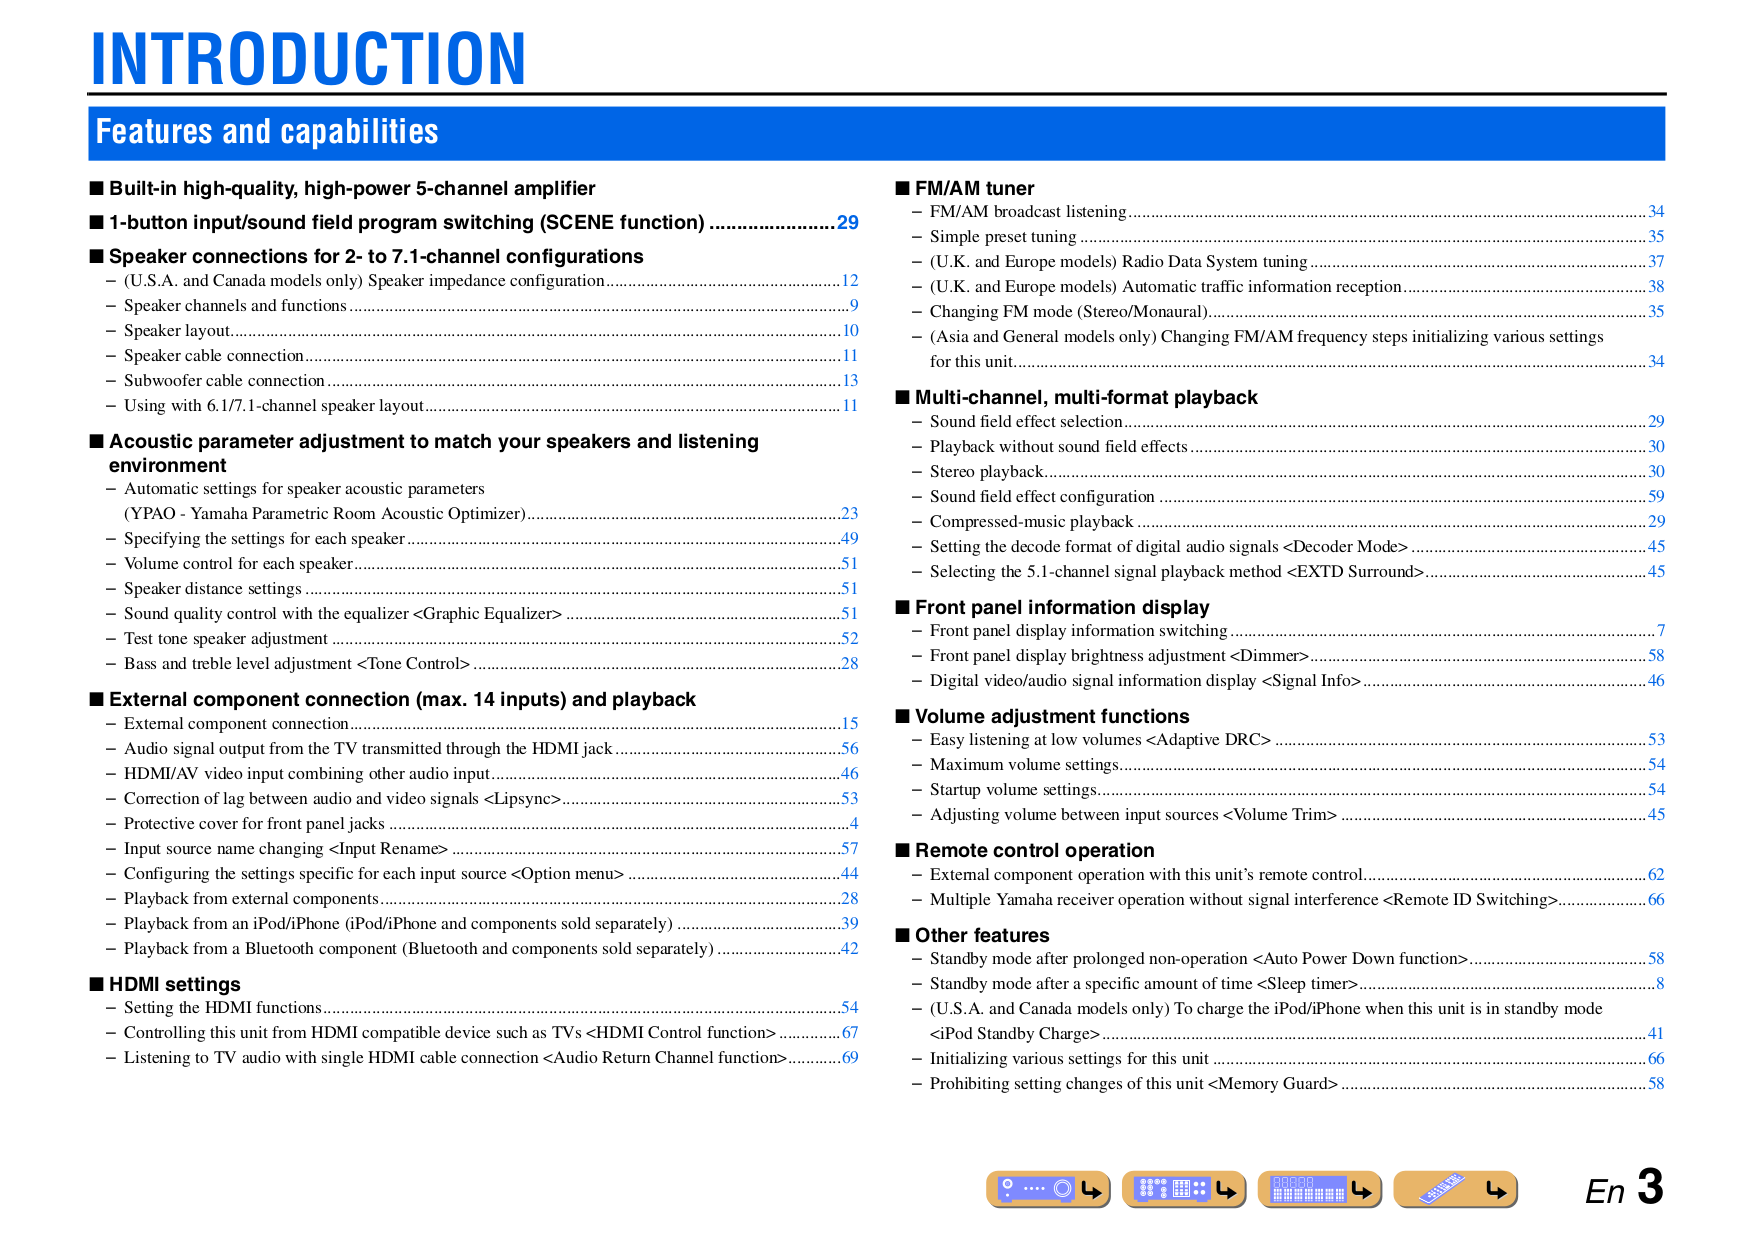 PDF manual for Yamaha Receiver RX-V467